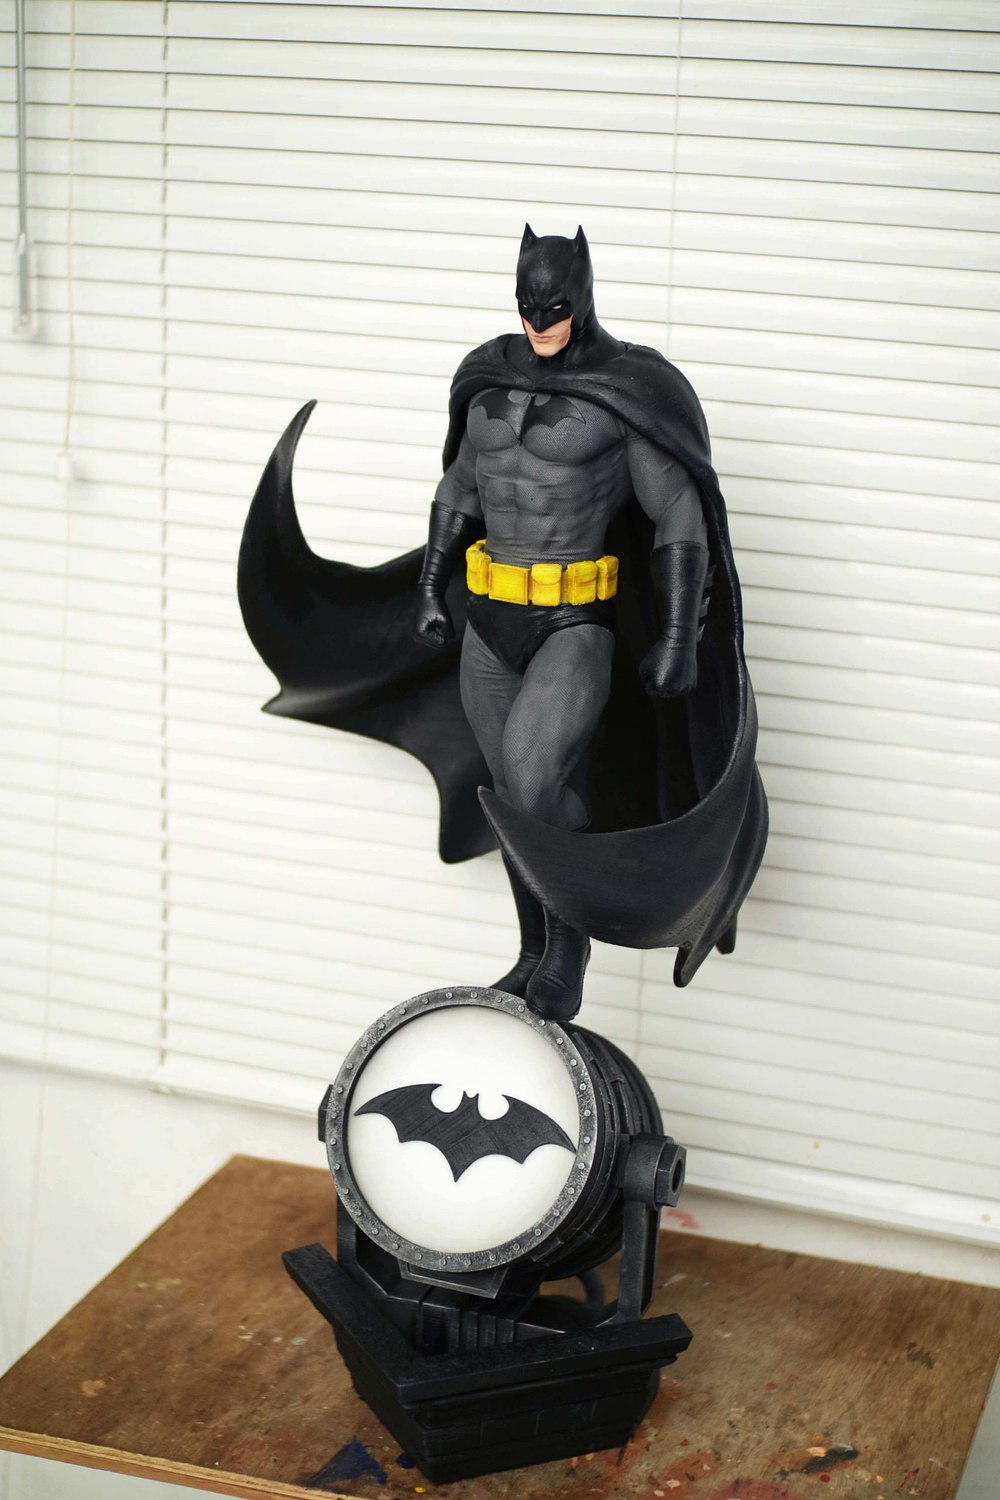 Batman and Bat Signal from DC